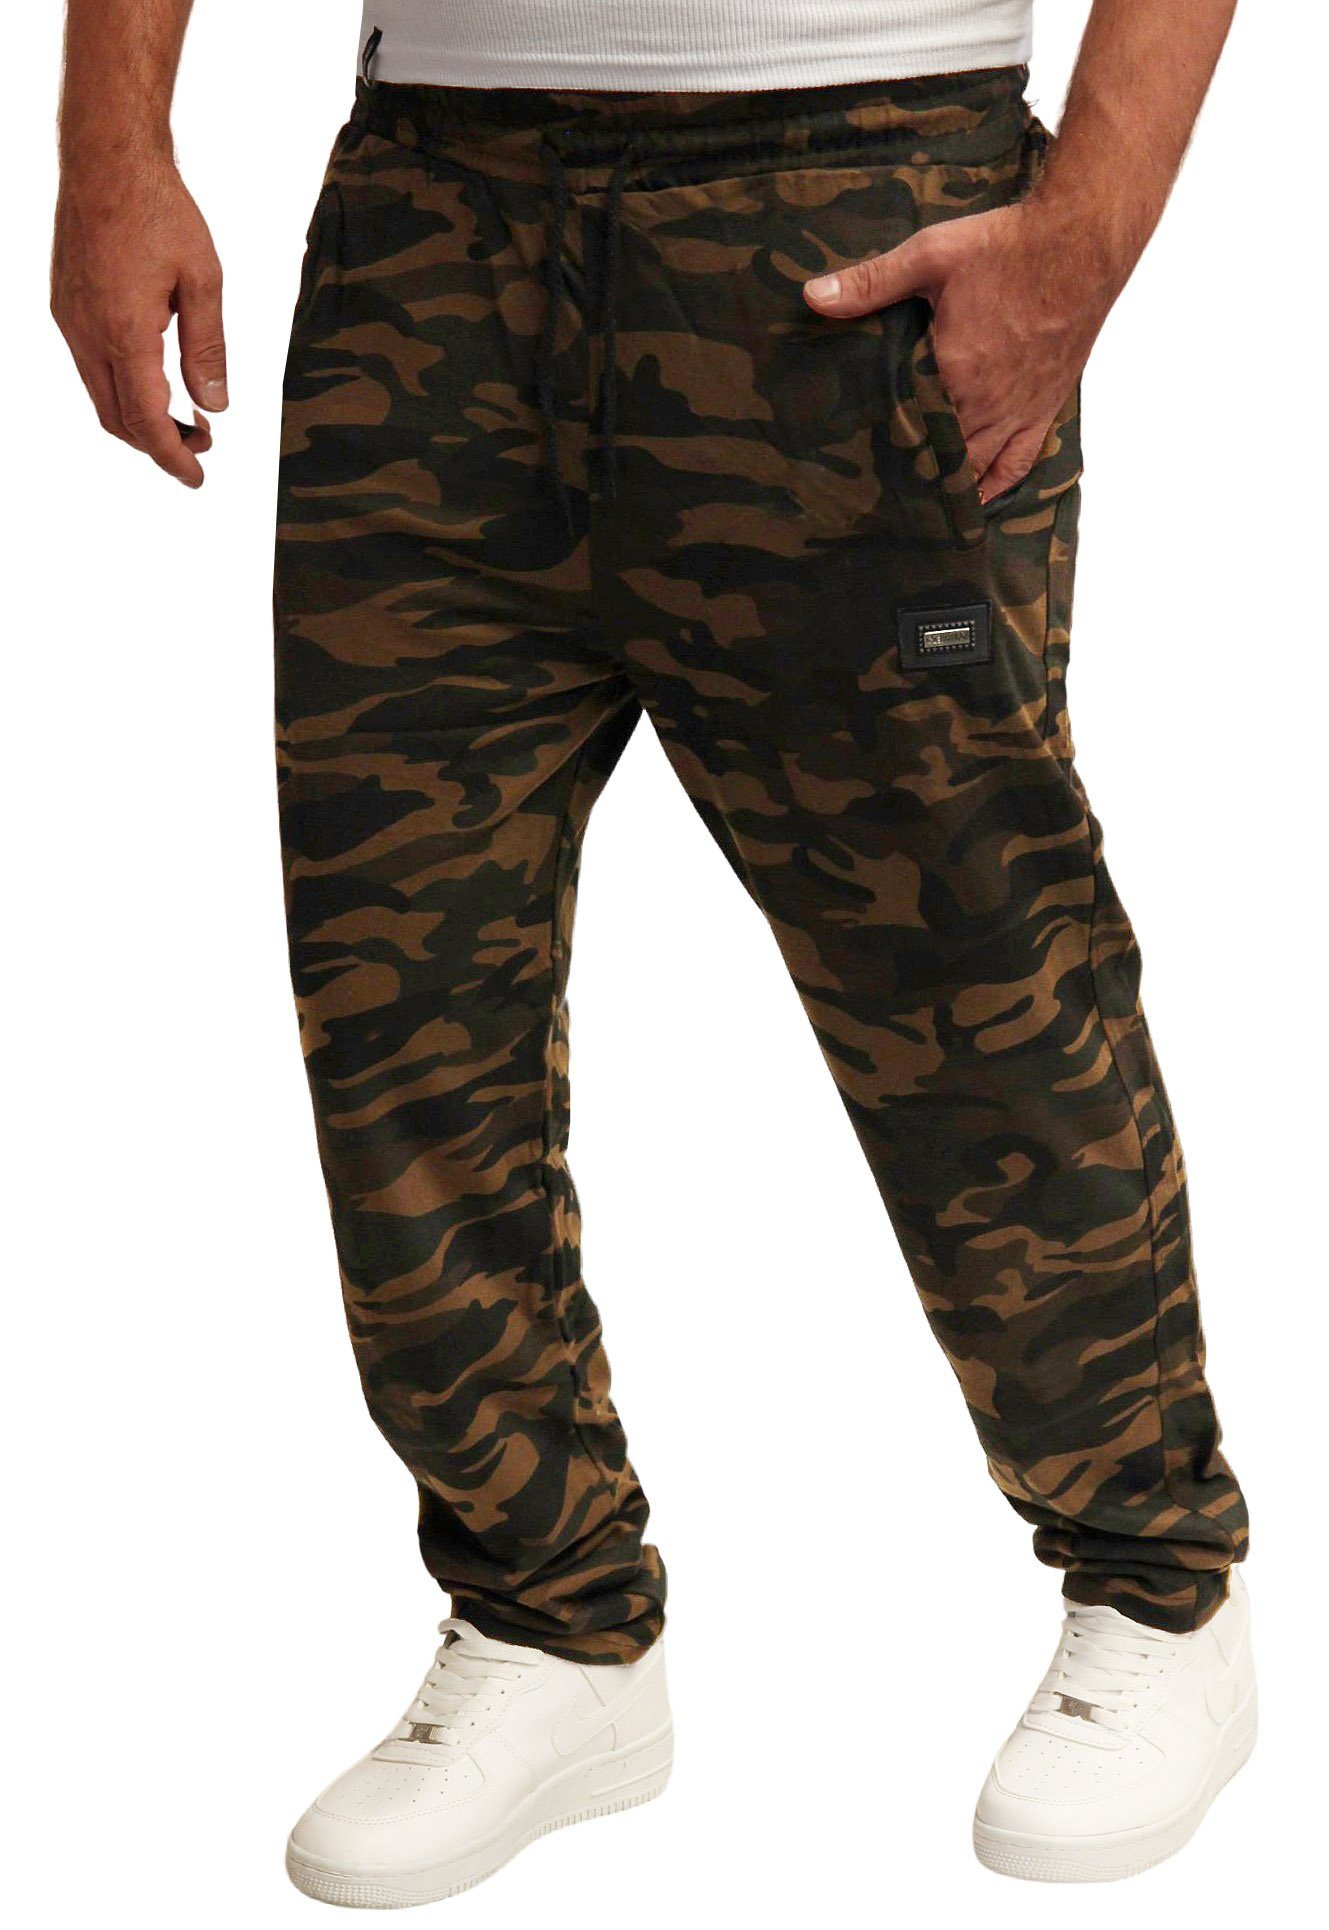 Tarn Fitnesshose Herren Jogginghose Camouflage-Grün RMK Trainingshose Camouflage Hose Army Jogginghose (2007)